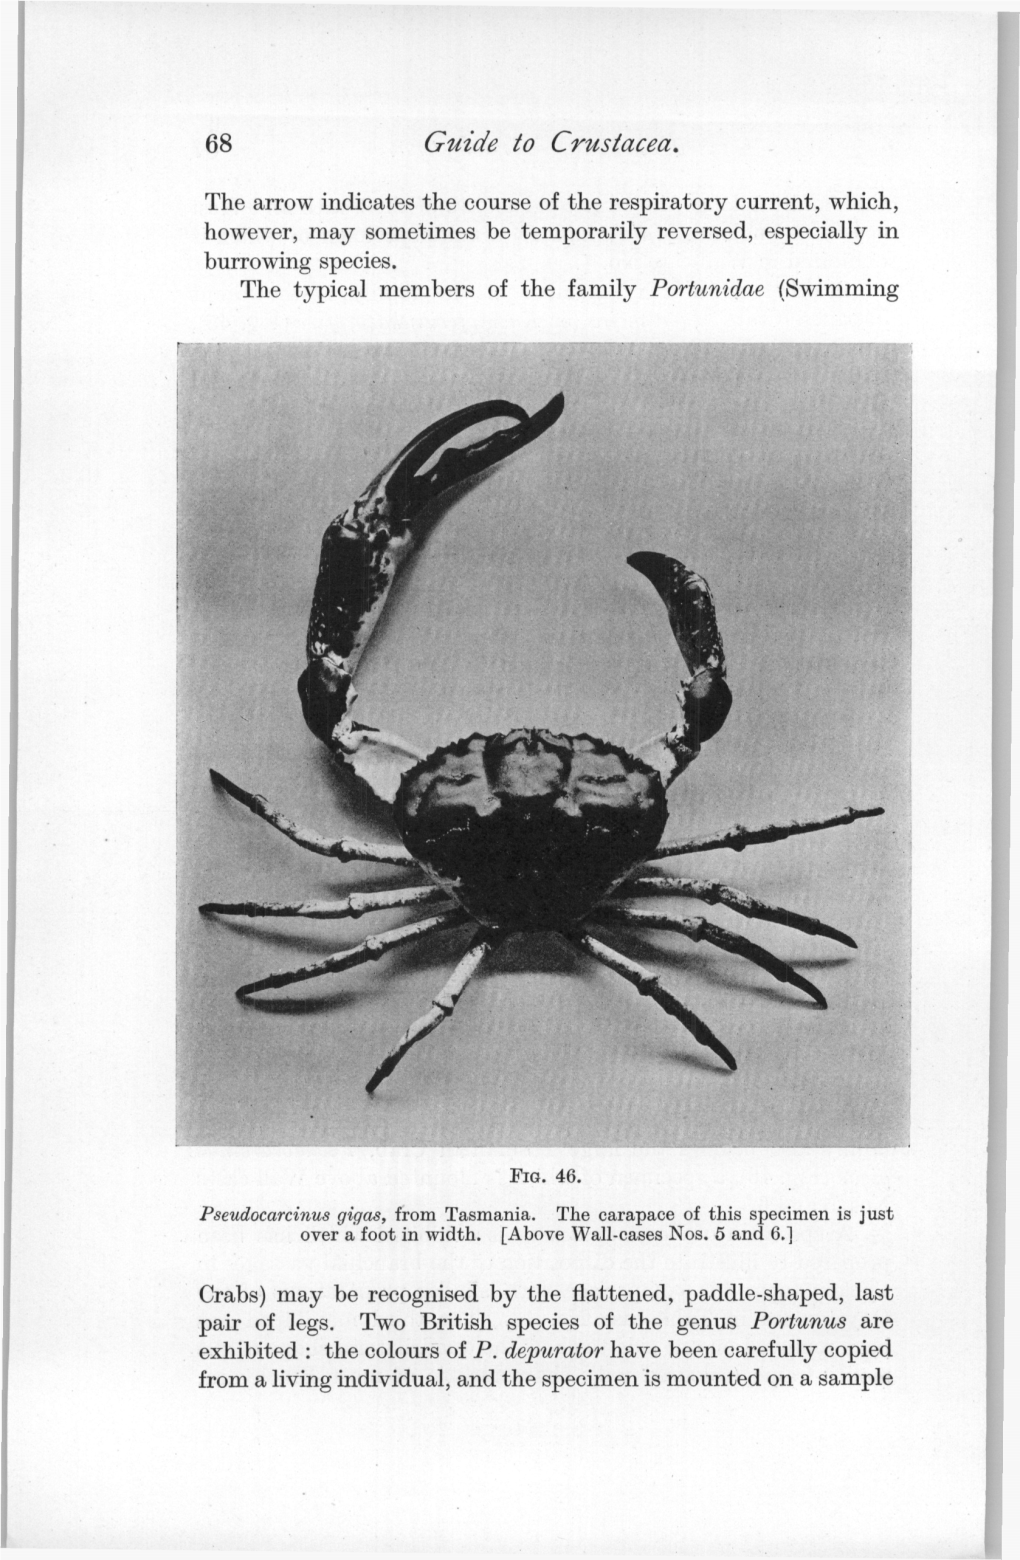 68 Guide to Crustacea